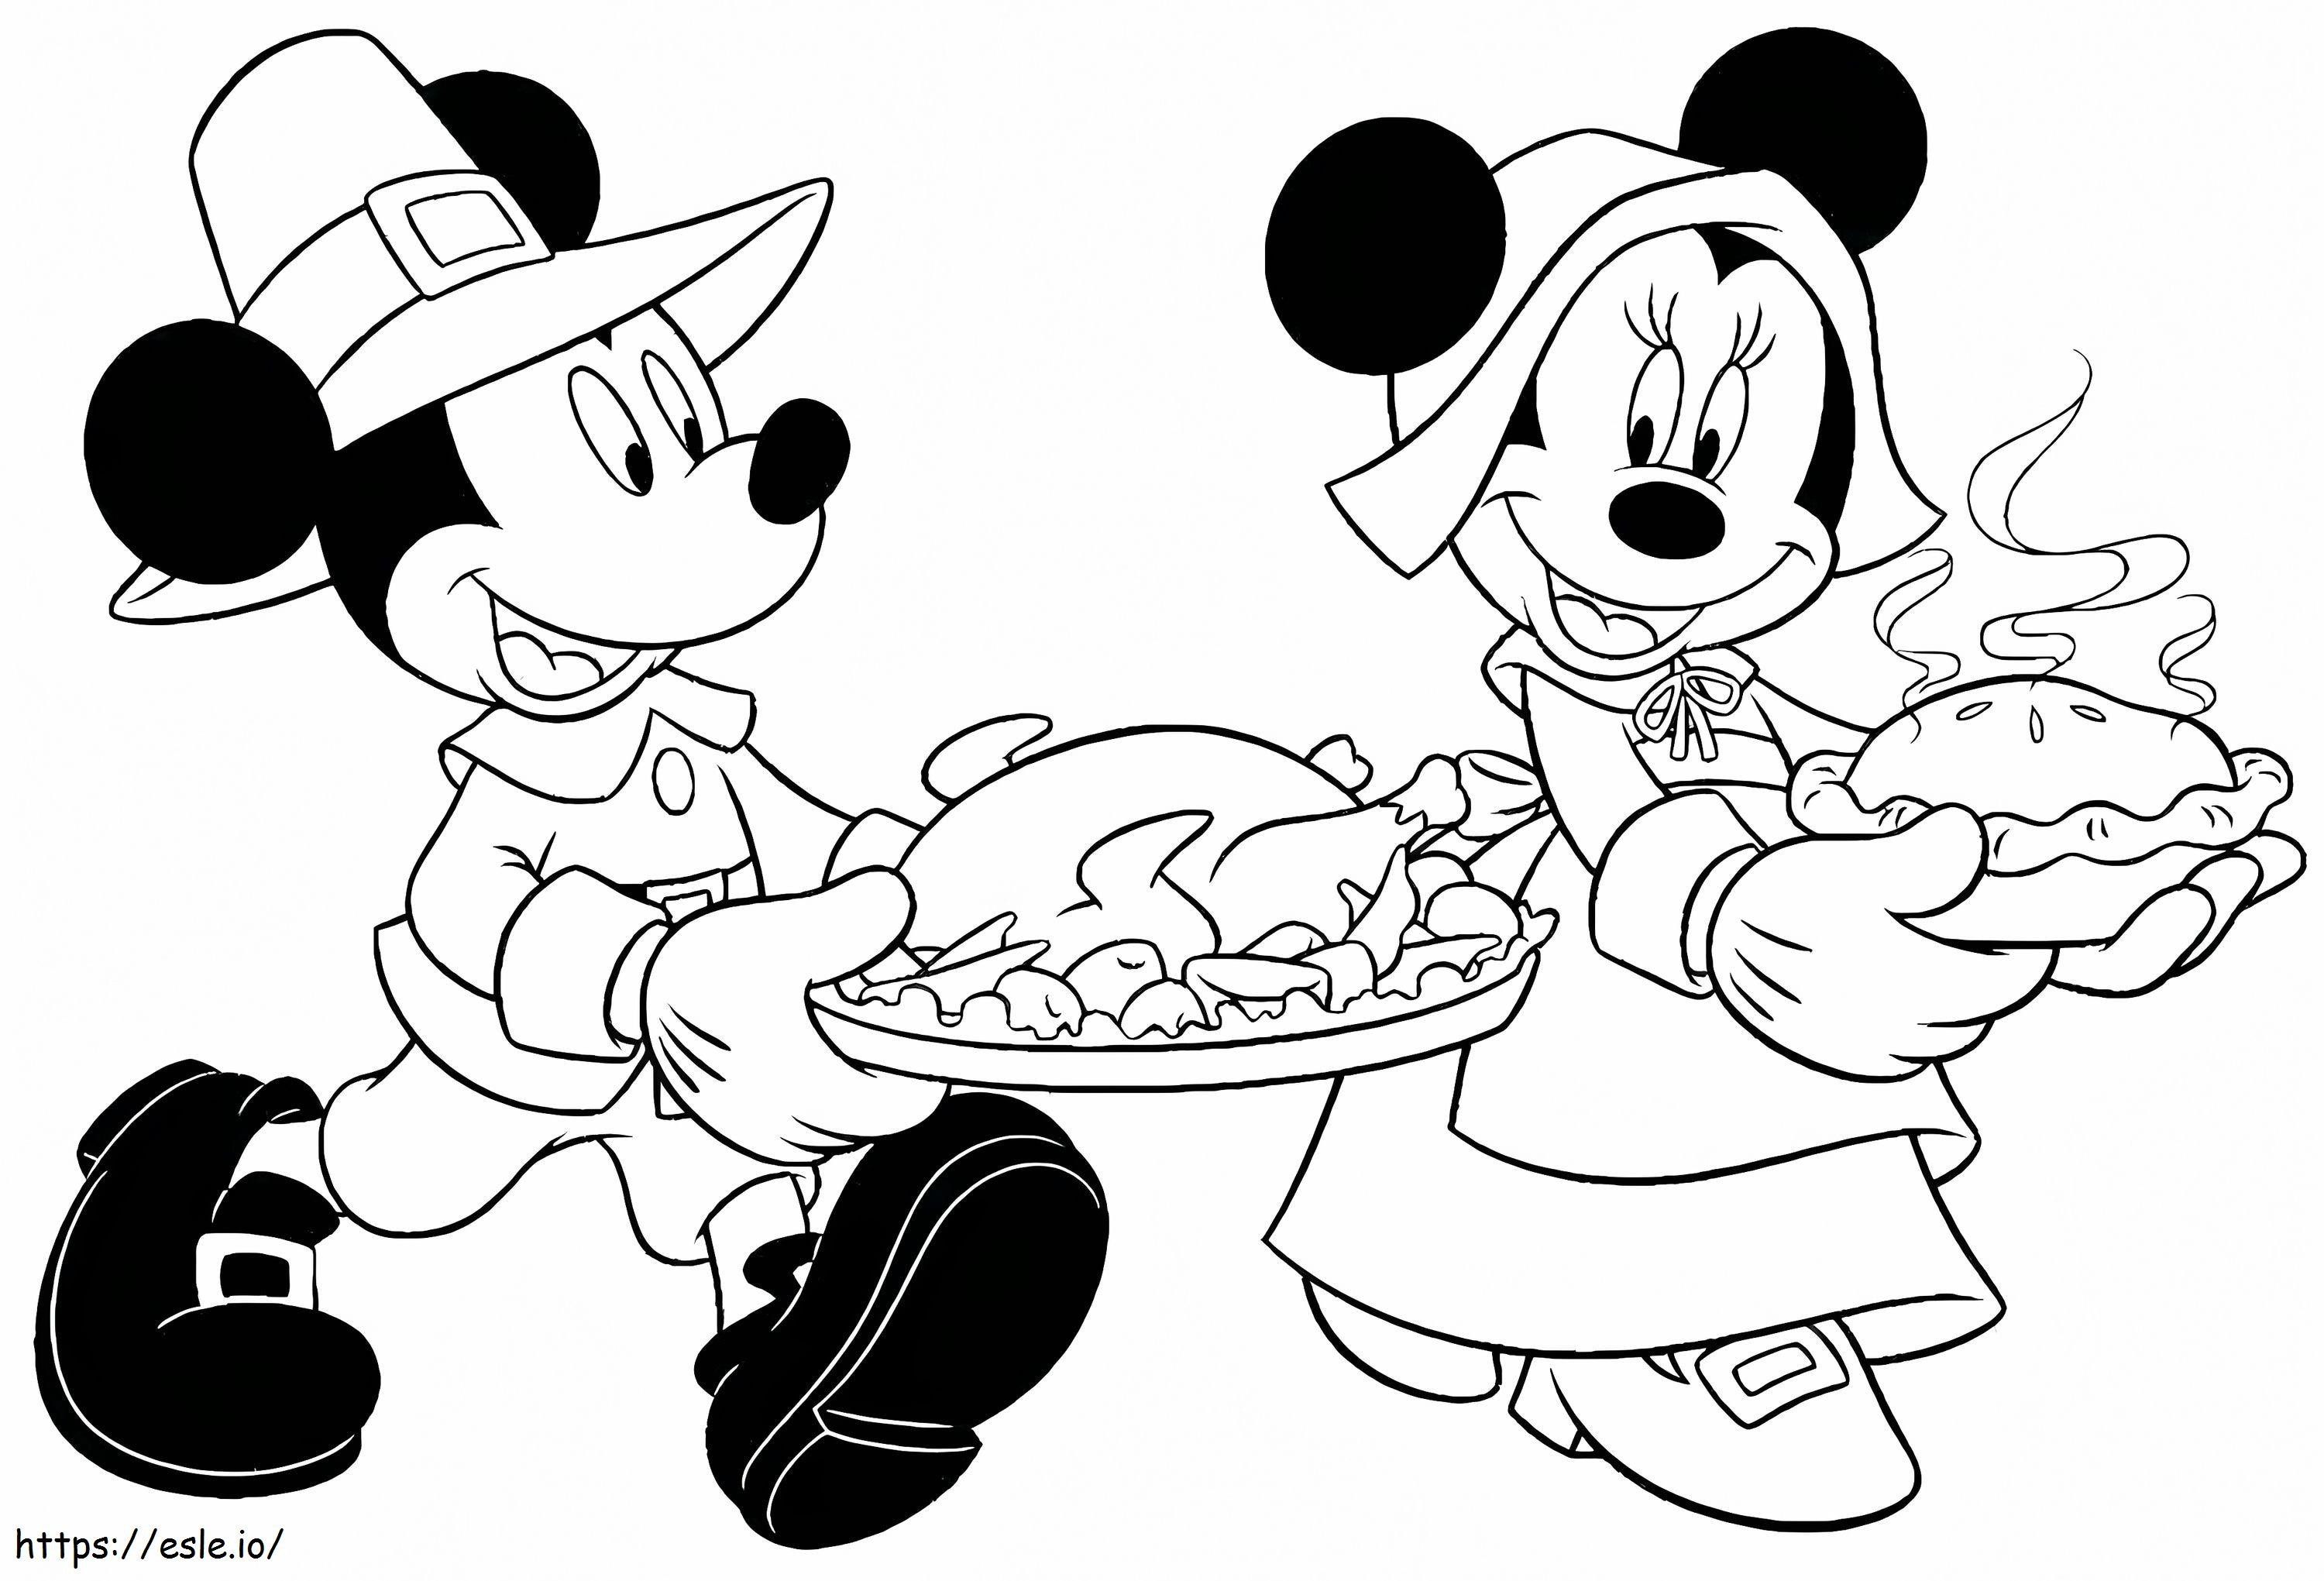  Bebeluş Mickey şi Minnie Bebeluşul Mickey Mouse Bebeluşul Mickey Mouse Bebeluşul Mickey Mouse Bebeluşul Mickey Mouse de colorat Bebeluşul Bebeluşul Mickey şi Minnie de colorat